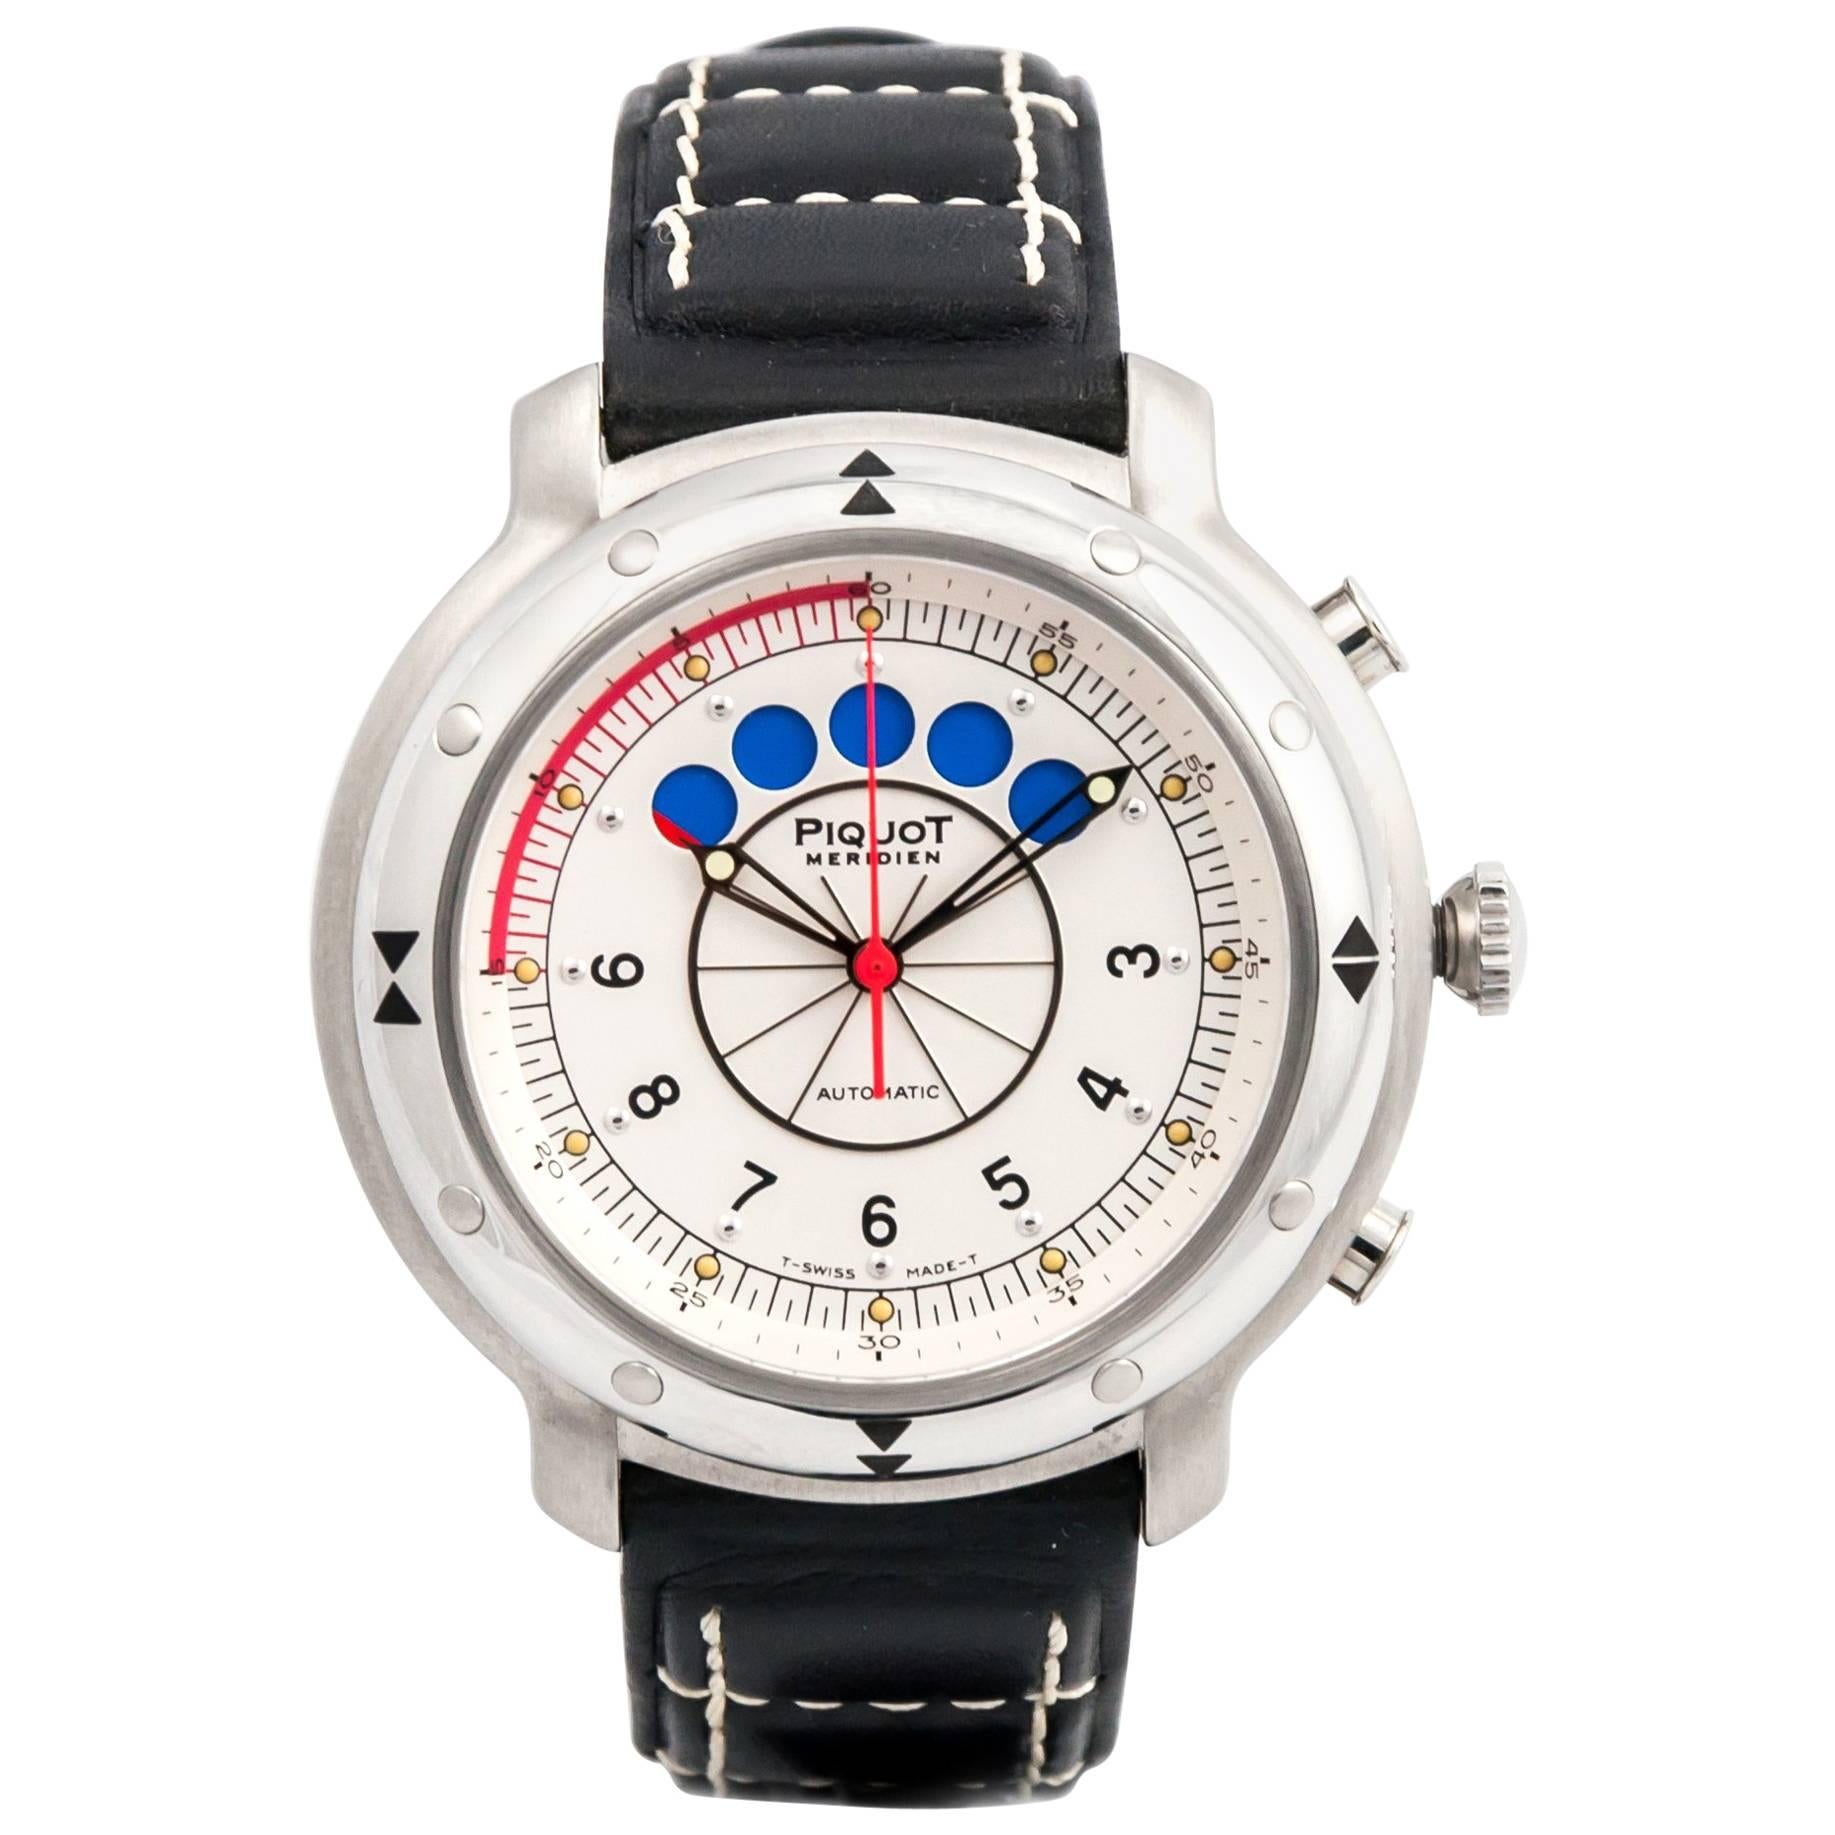 Piquot stainless Steel Meridien Regatta Chronograph Automatic Wristwatch